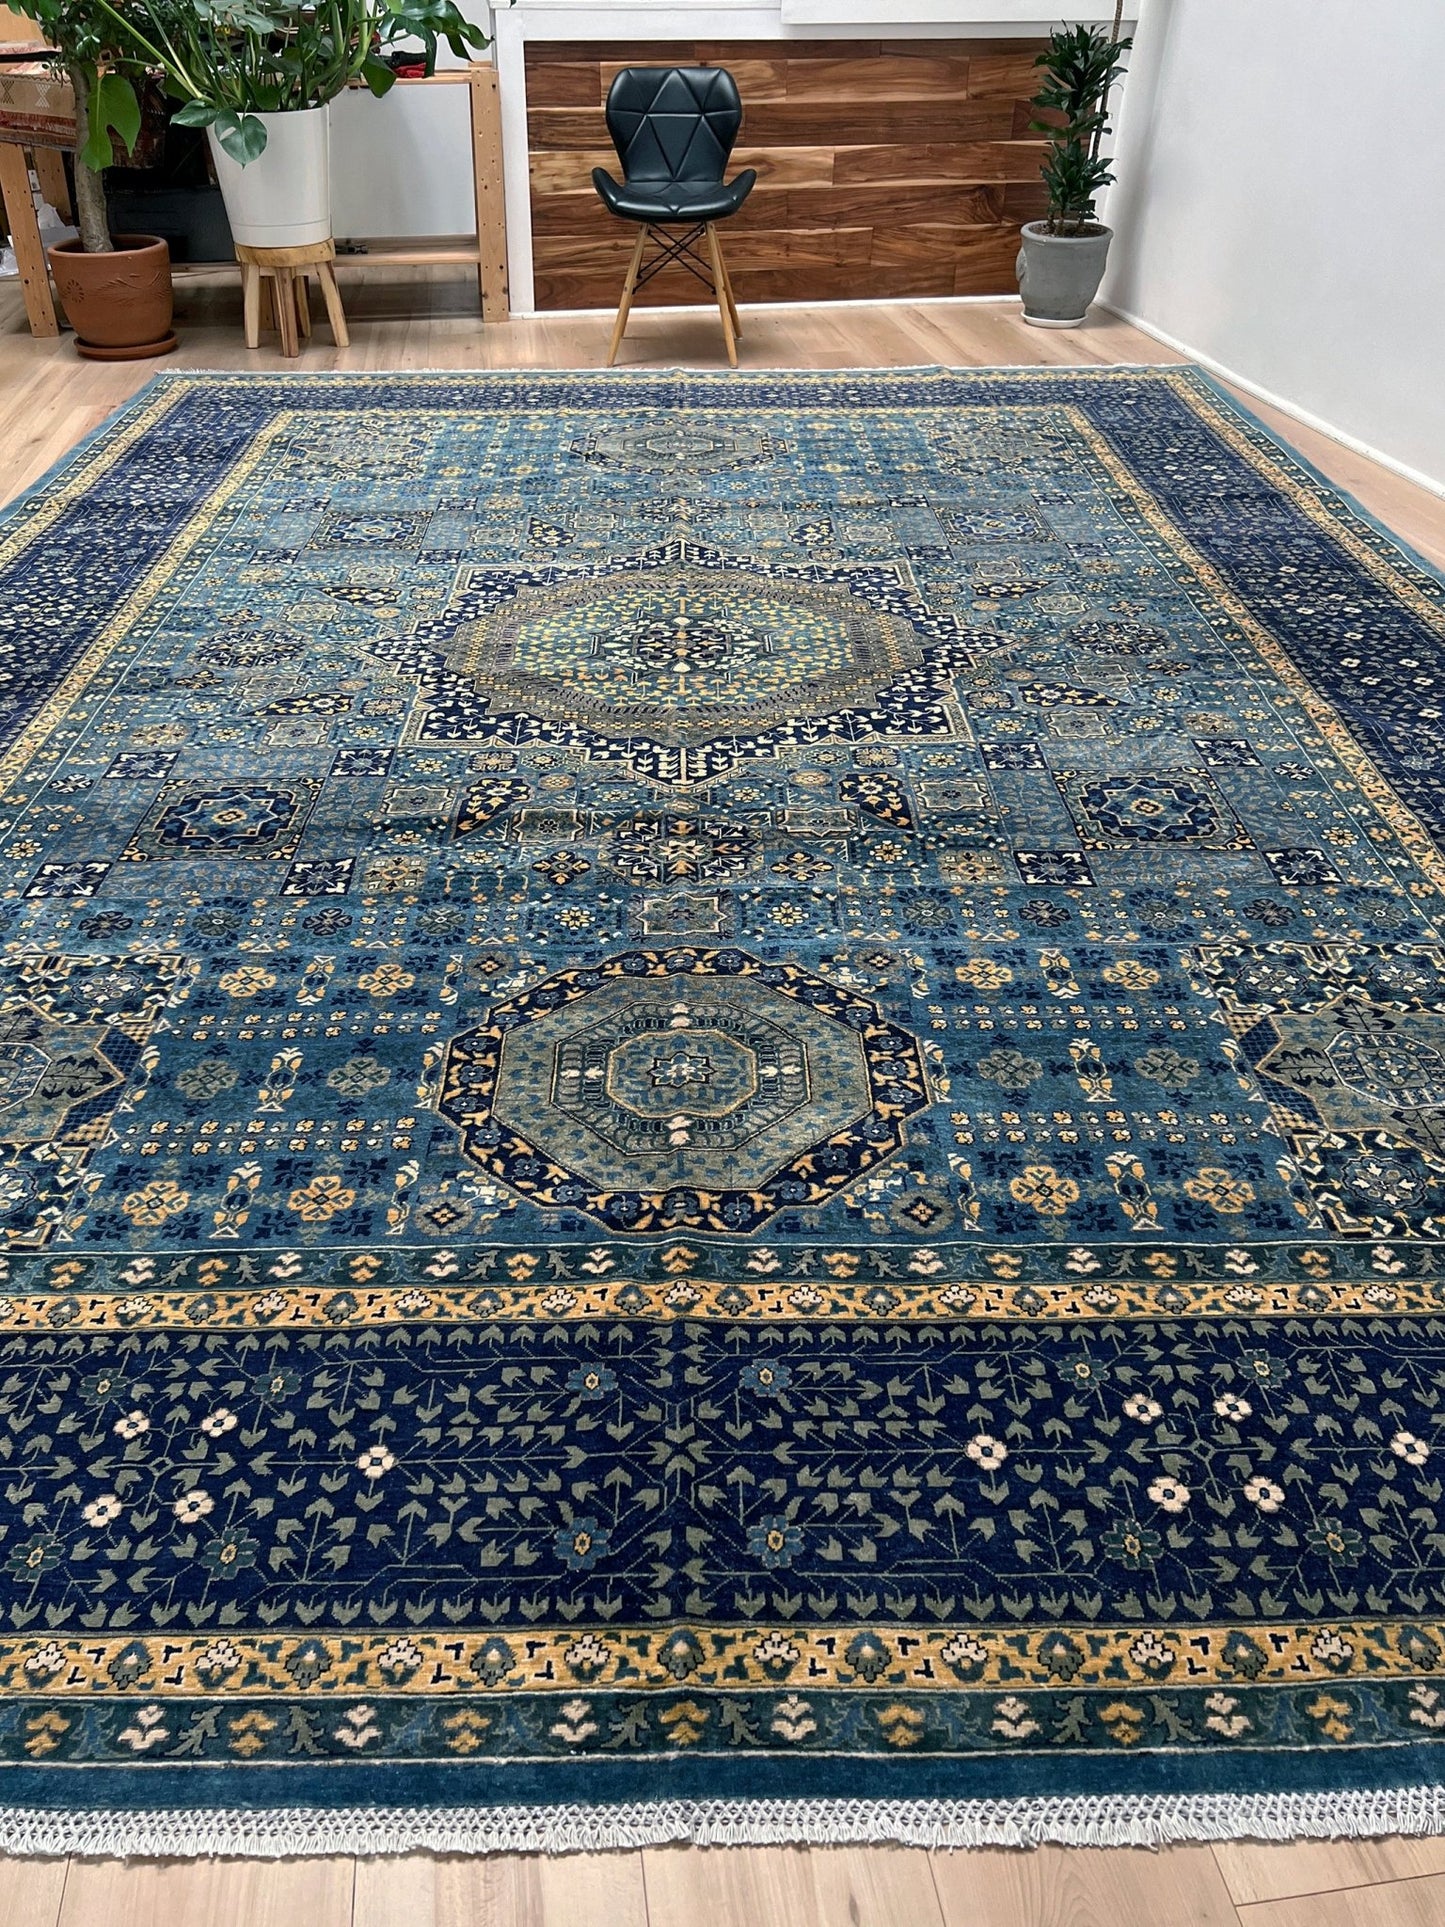 50x50 mamluk handmade area rug. 10x14 rug for living room. Luxury rug shop palo alro. Oriental rug shop san francisco bay area.